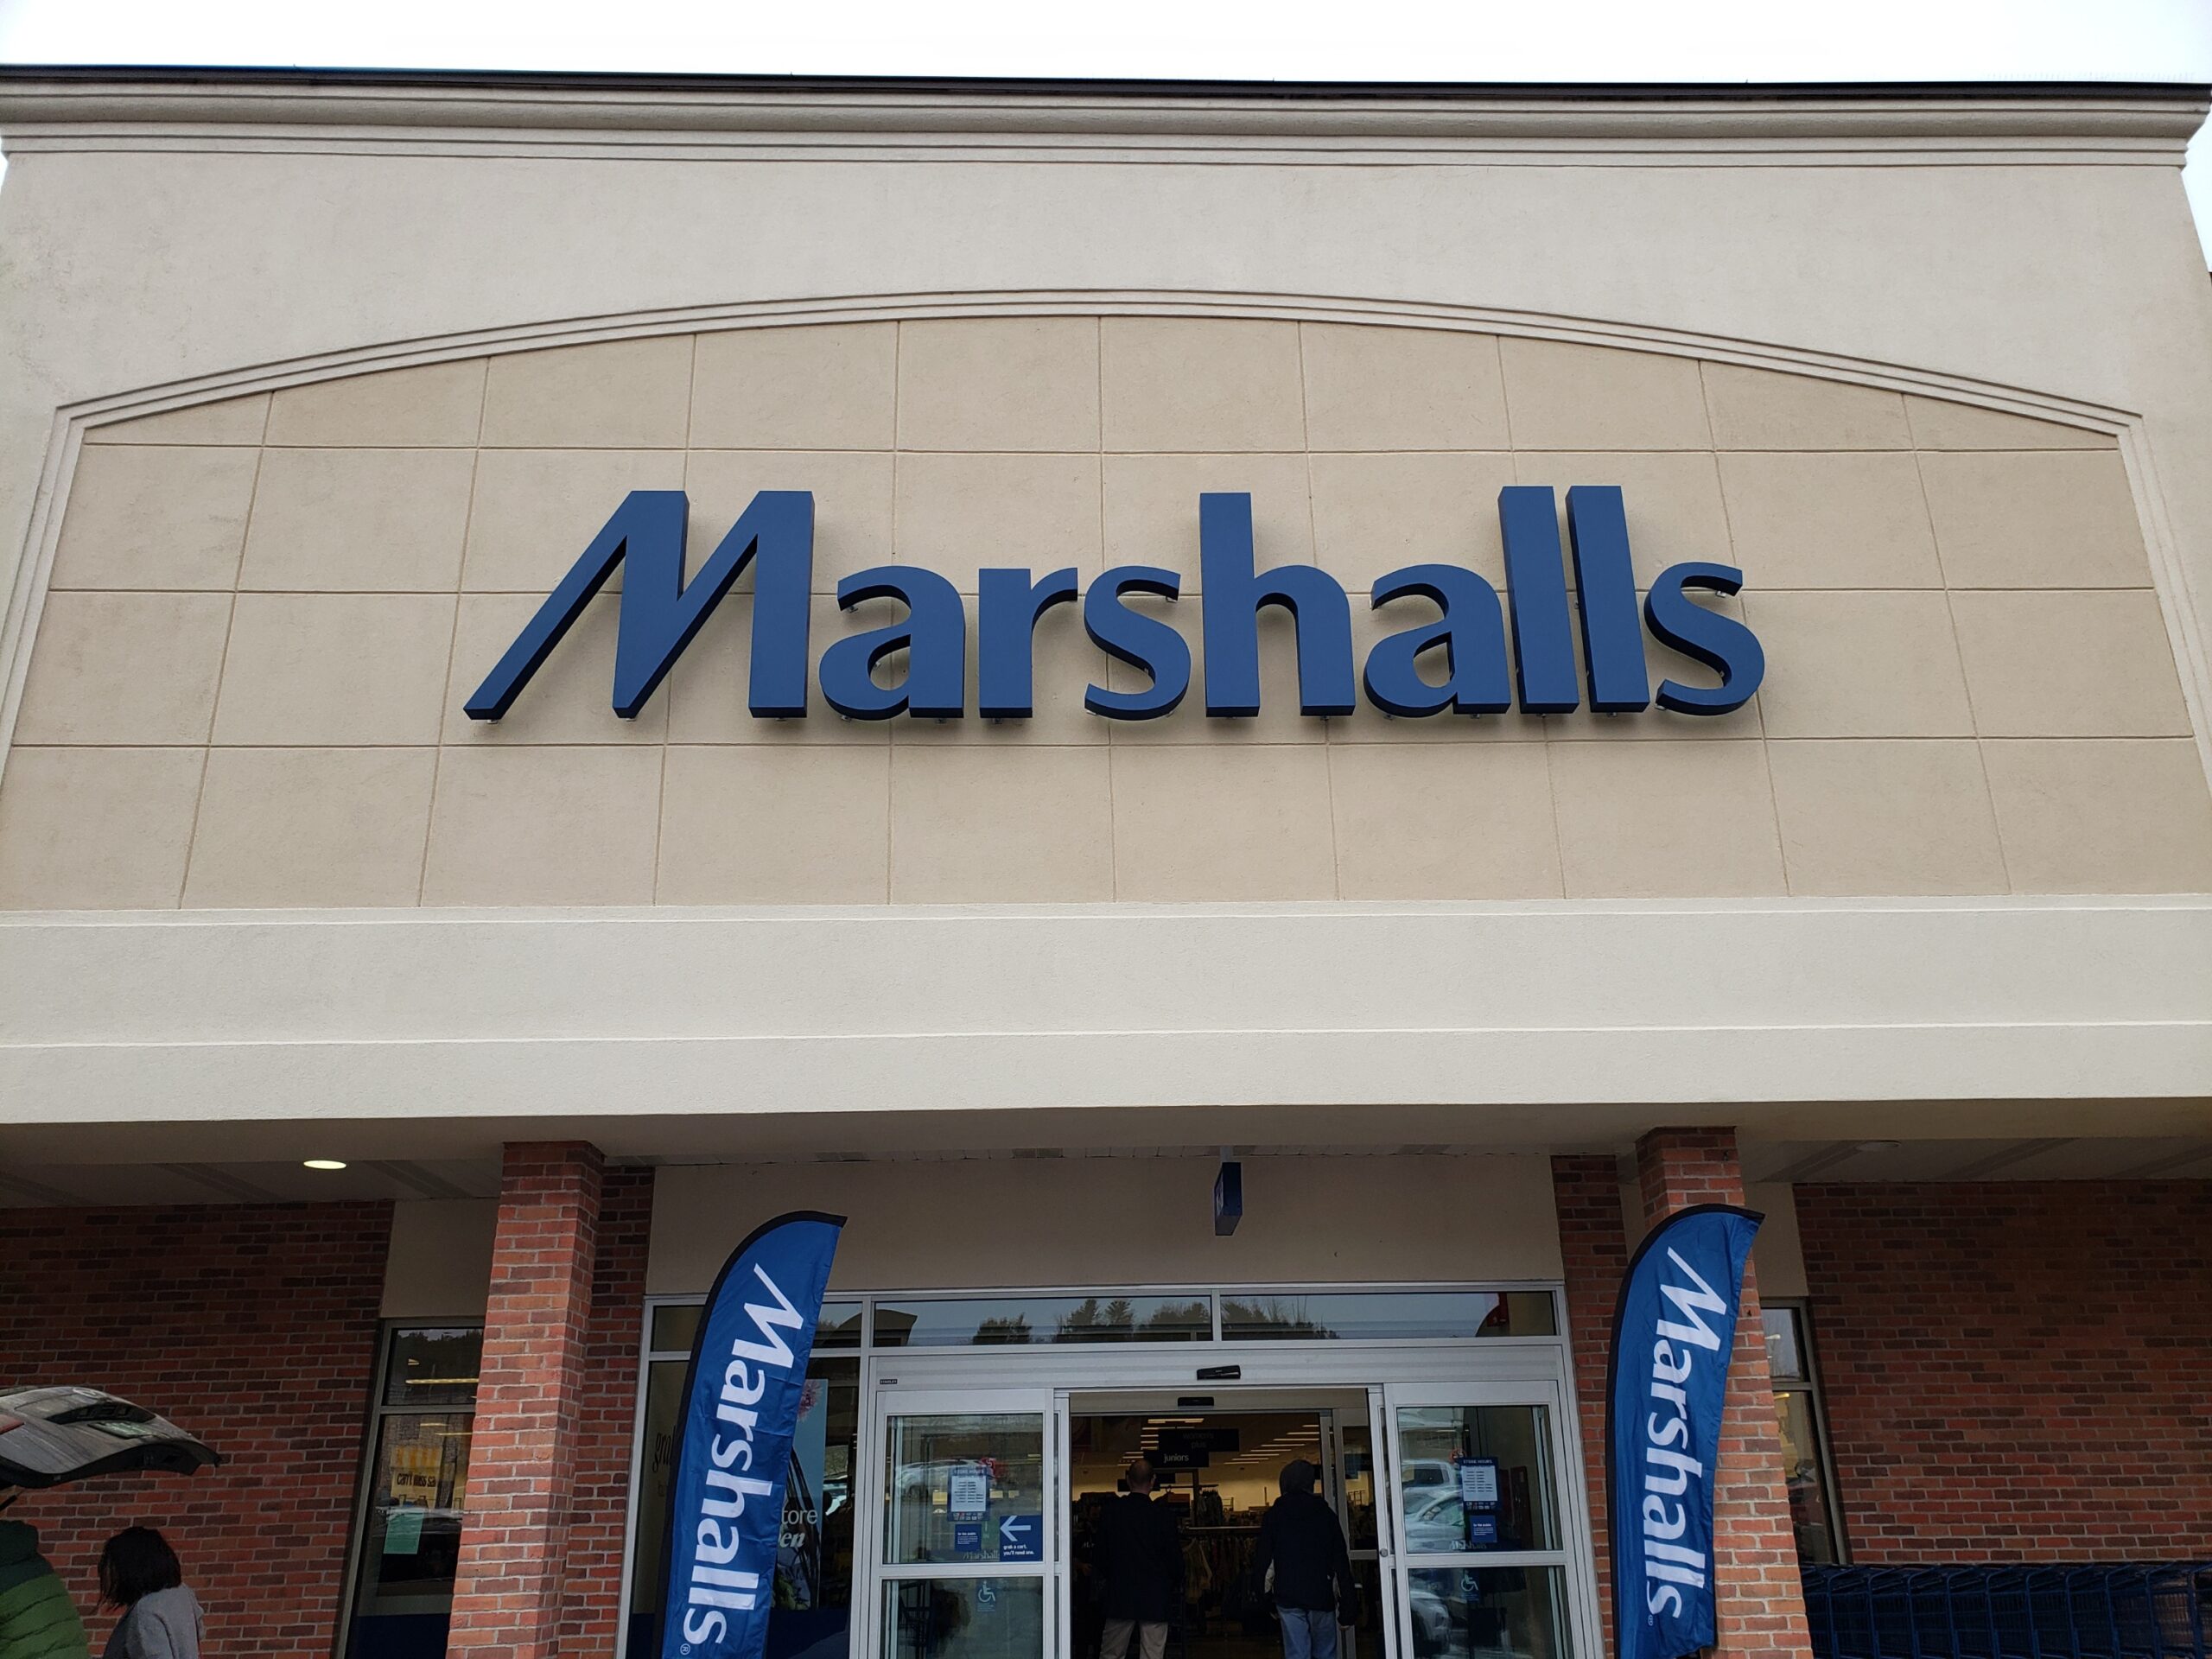 Marshalls grand opening in Morrisville, VT